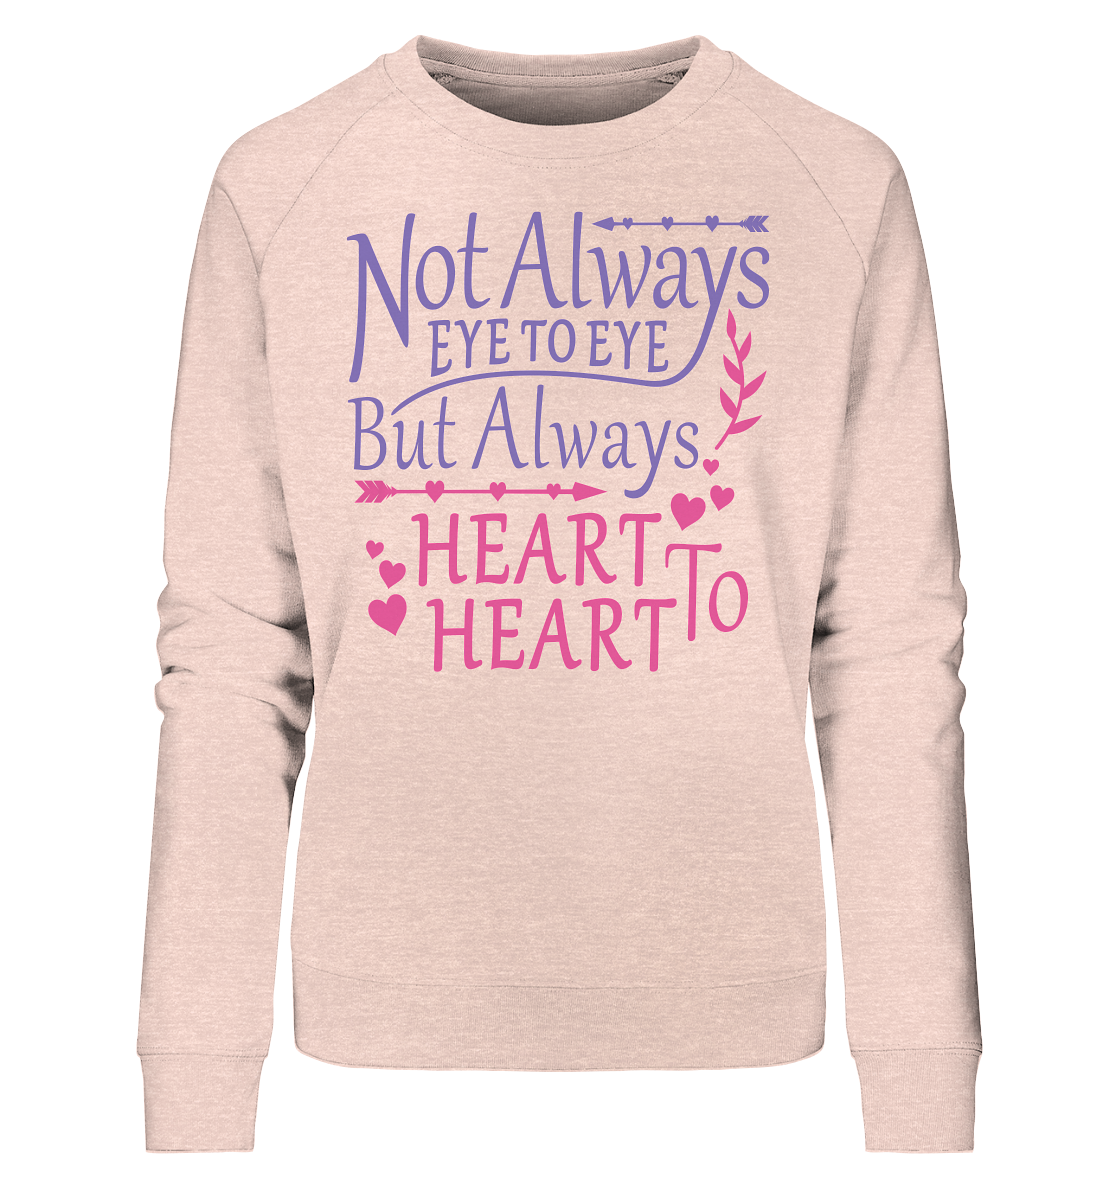 Not always eye to eye but always heart to heart - Ladies Organic Sweatshirt